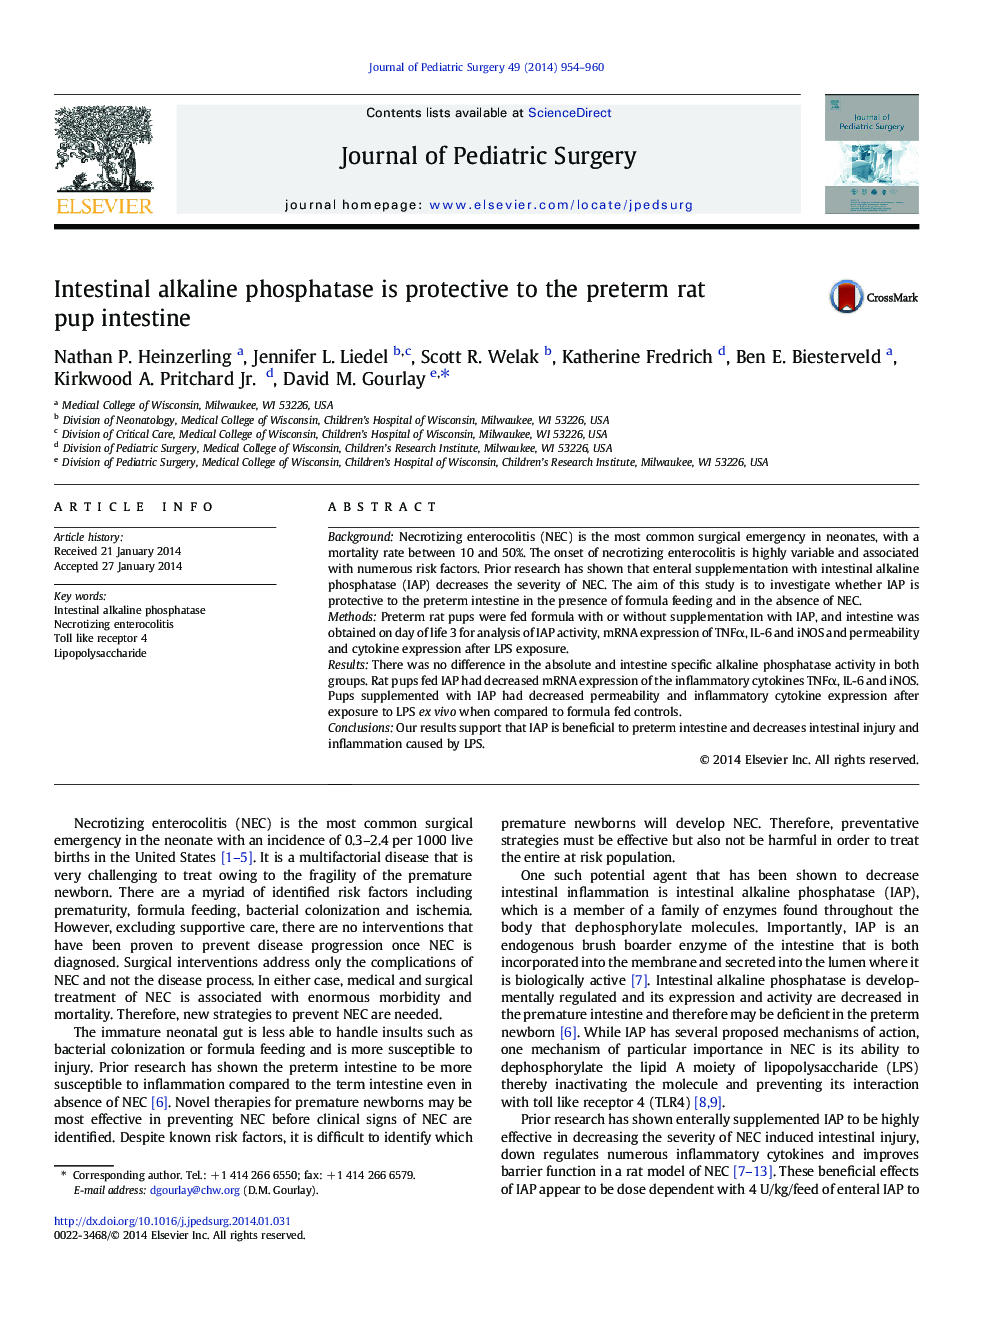 AAP PaperIntestinal alkaline phosphatase is protective to the preterm rat pup intestine